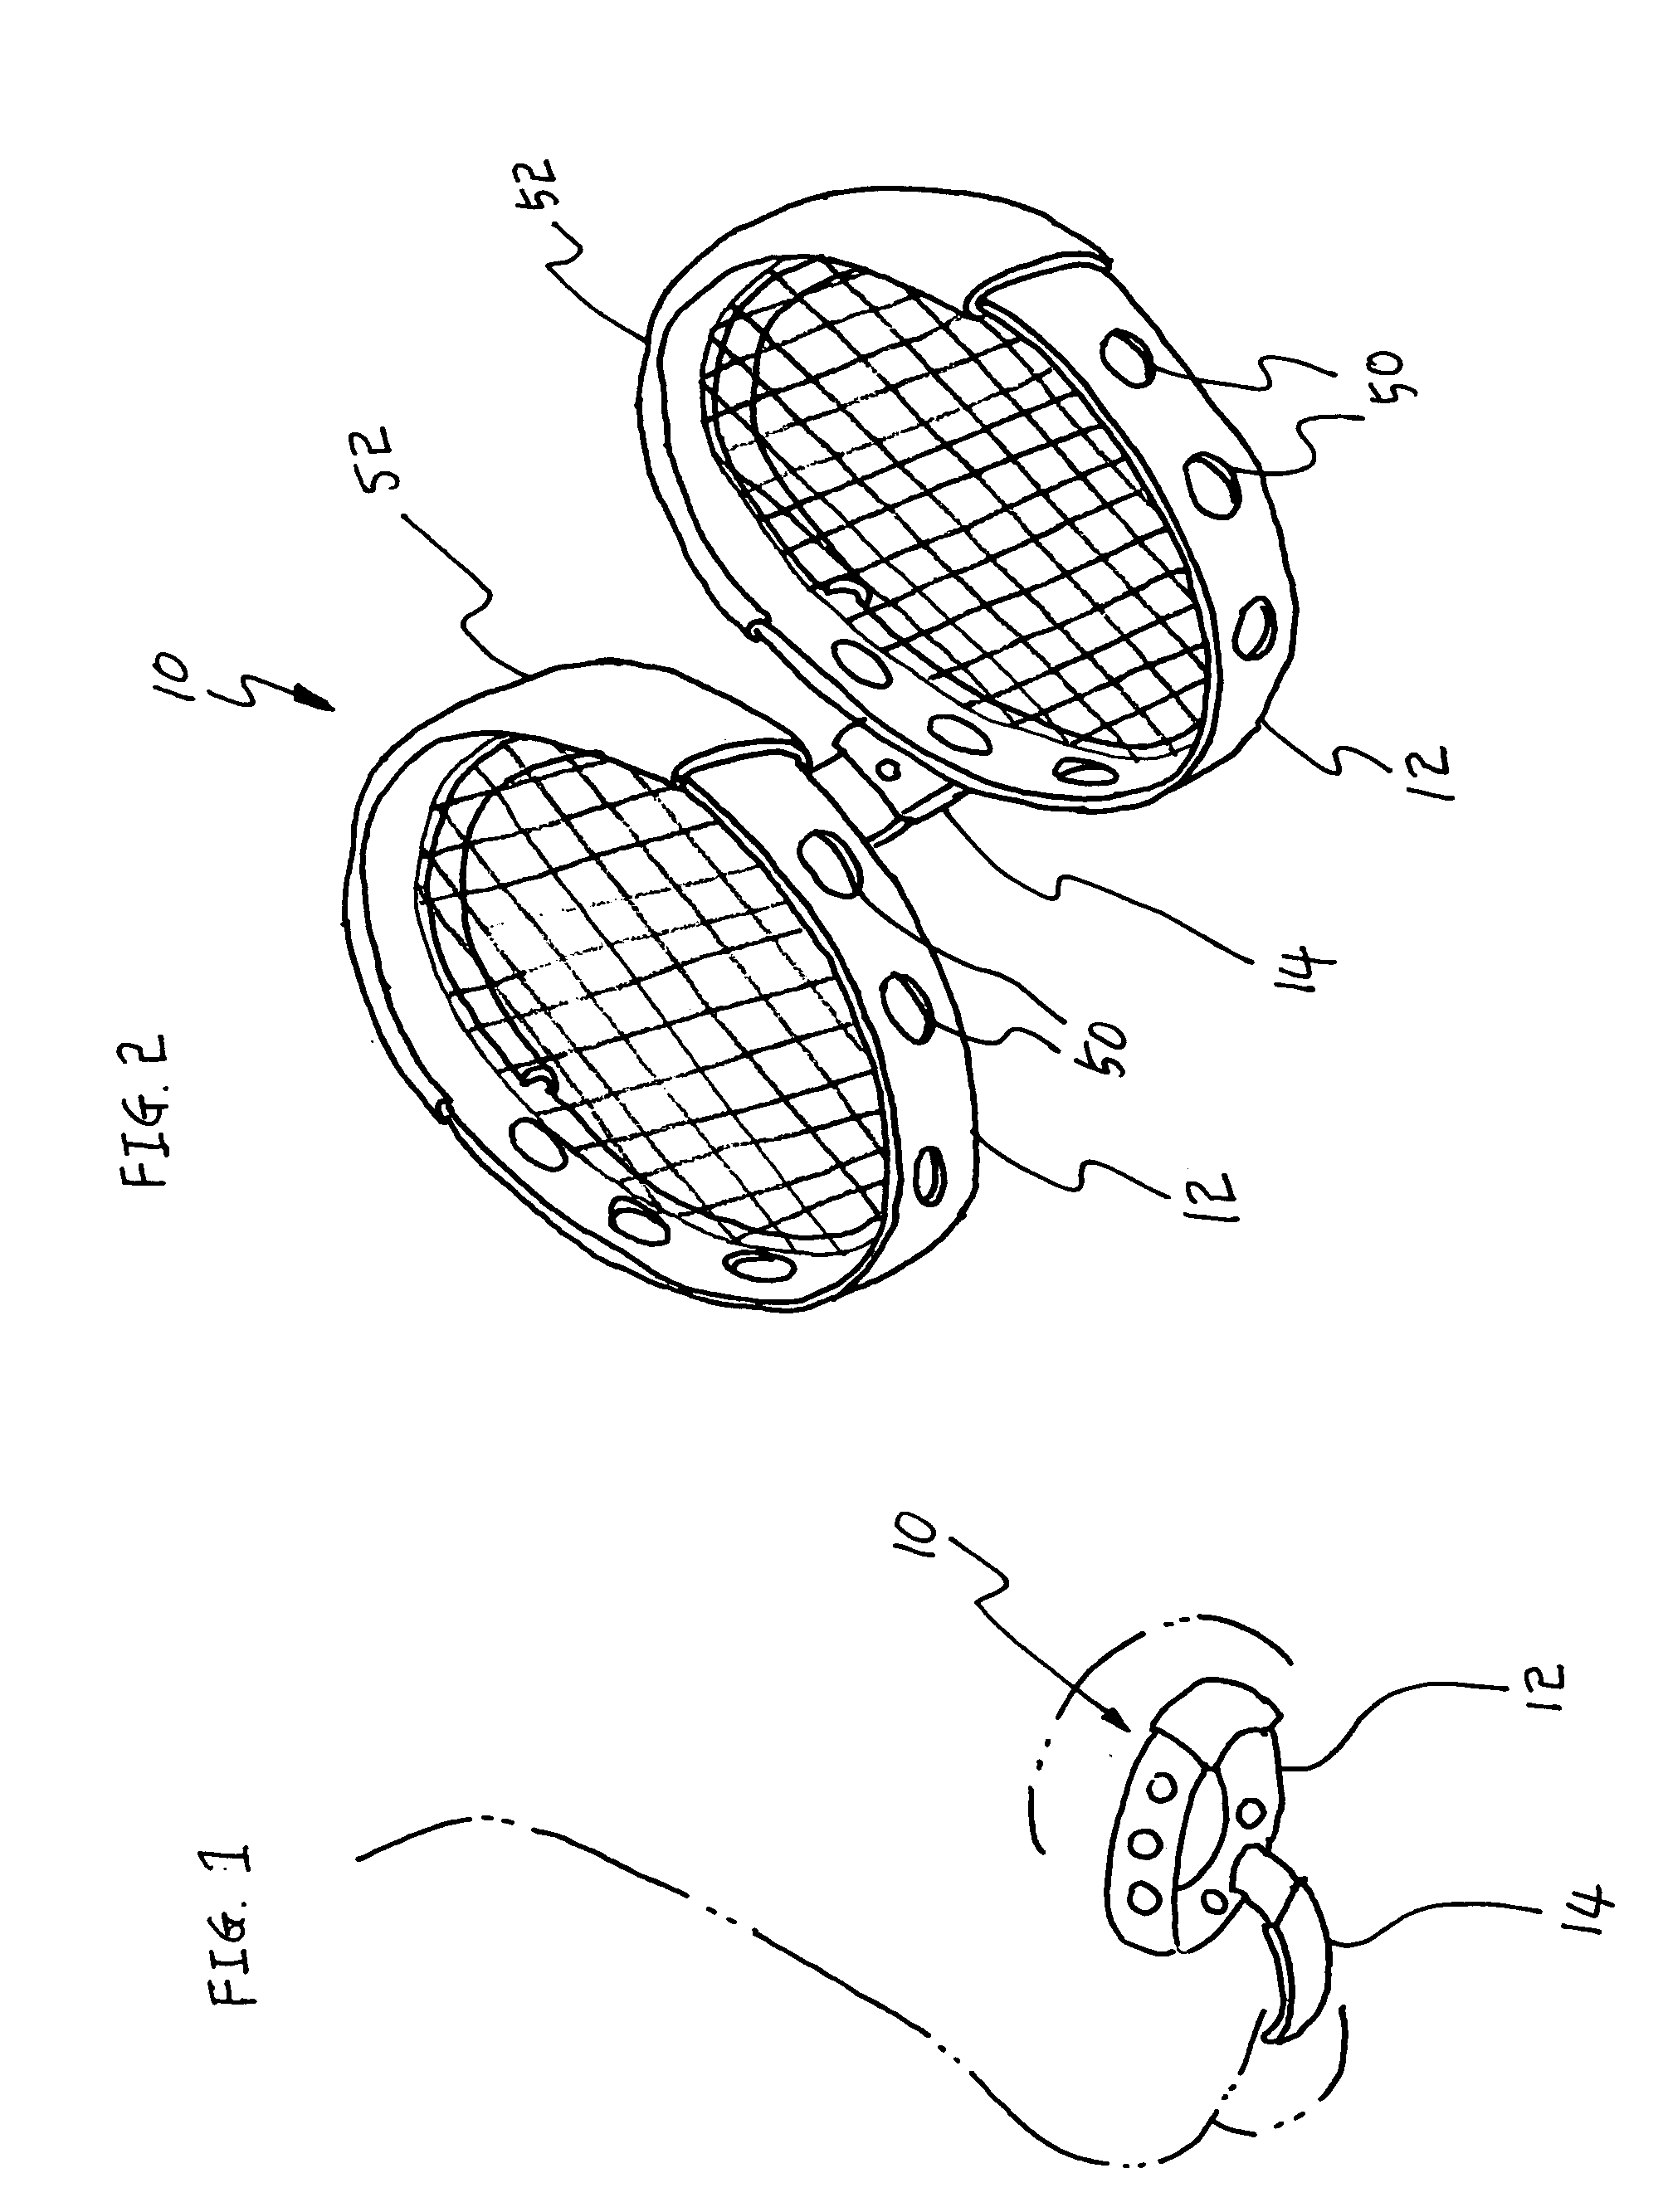 Wearable inhalation filter